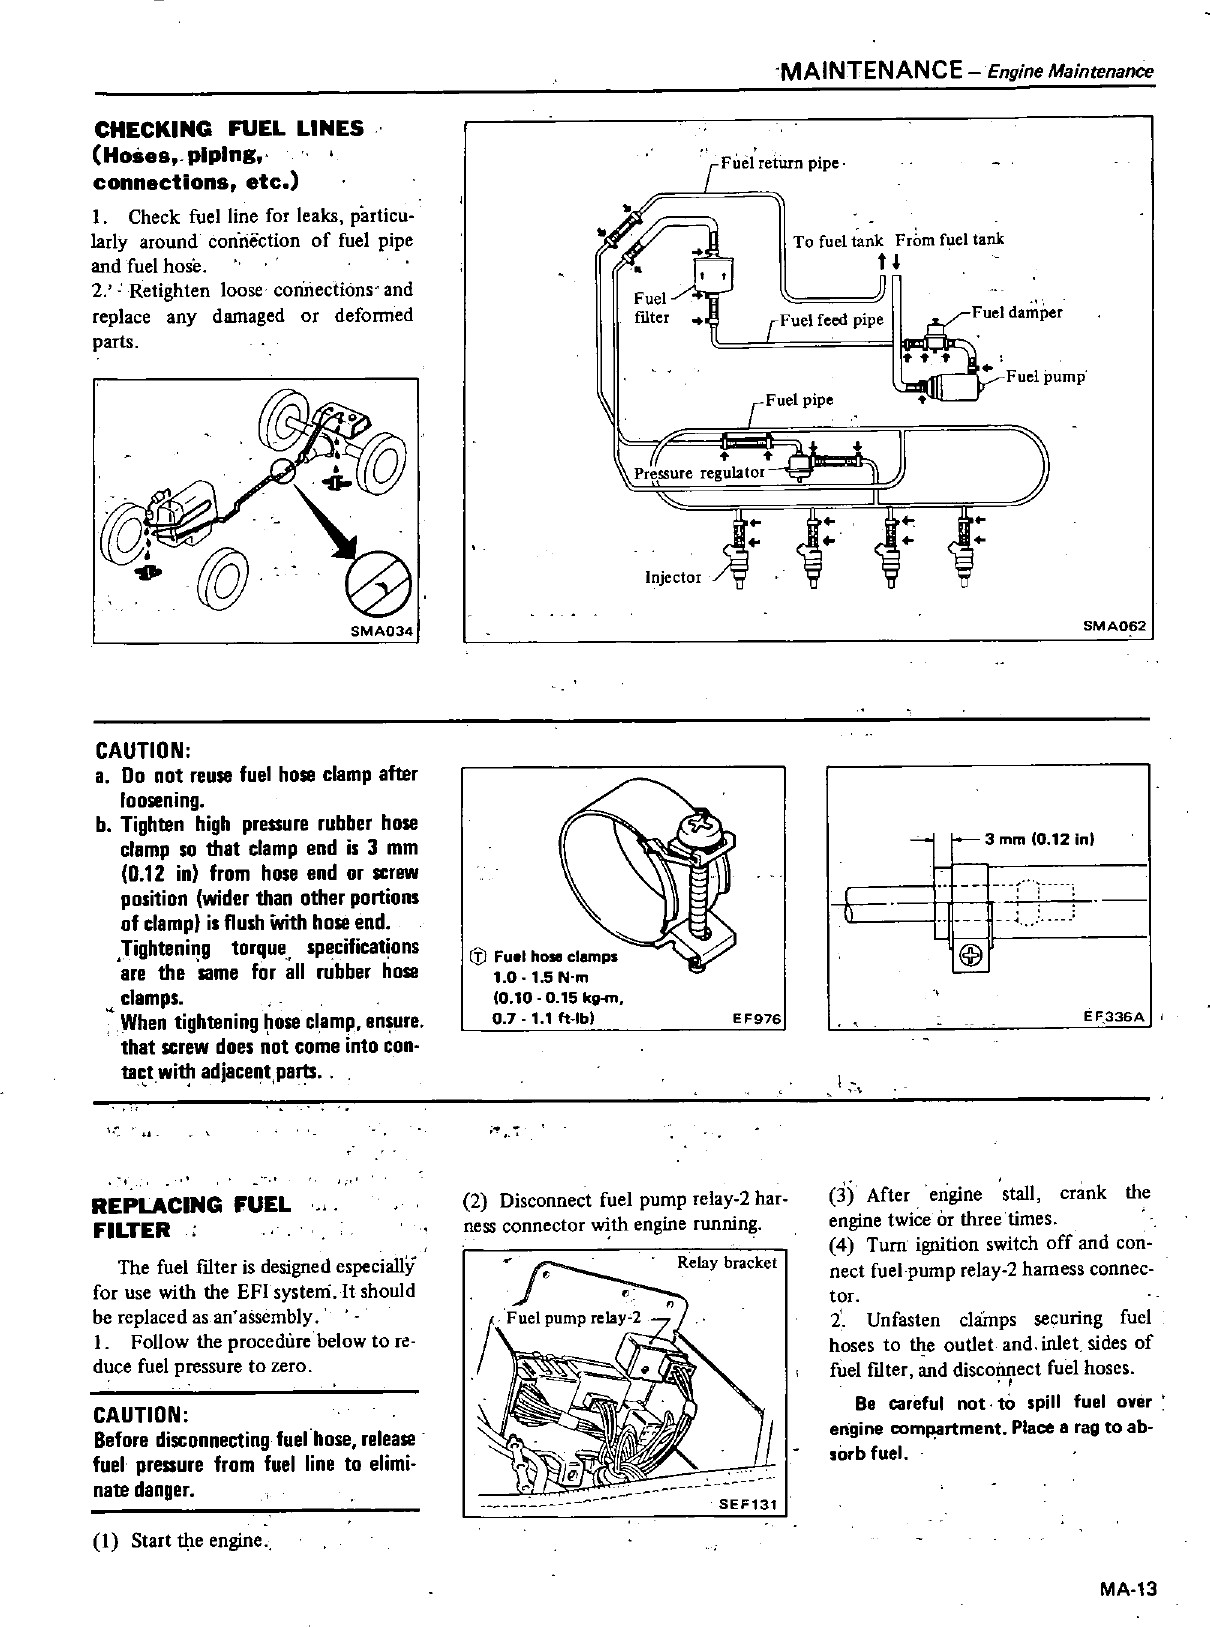 Wiring Push button Start On 1400 Datsun Nissan 1980 200sx Repair Manual Service Datsun